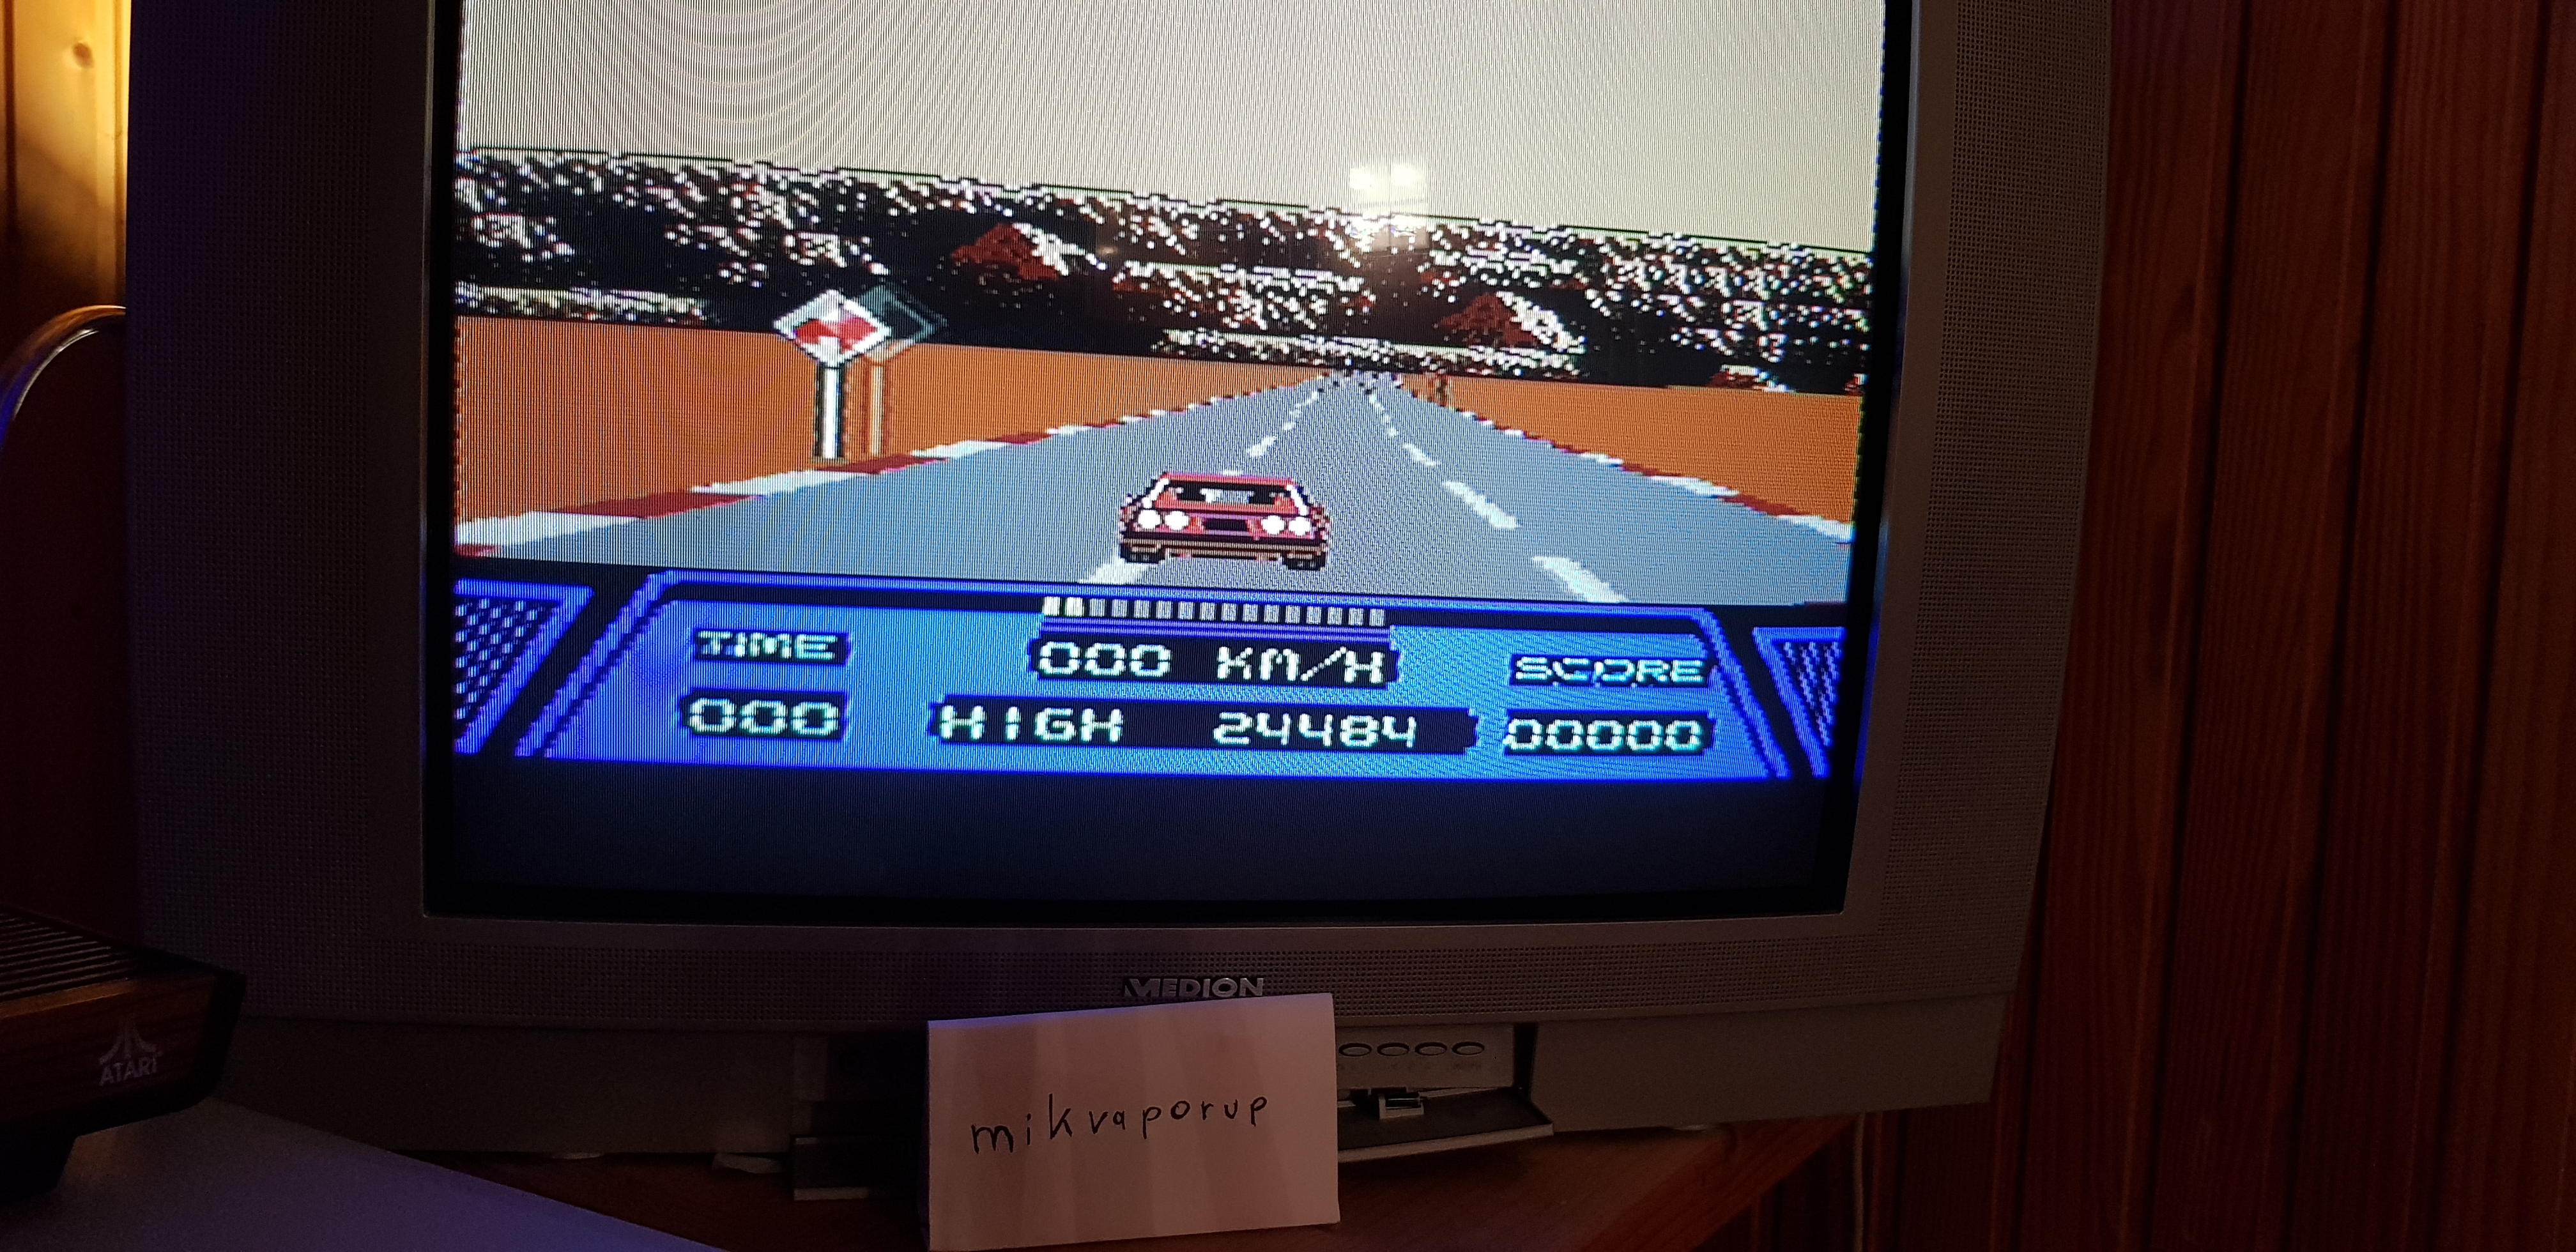 mikvaporup: Rad Racer (NES/Famicom) 24,484 points on 2019-09-21 14:23:04